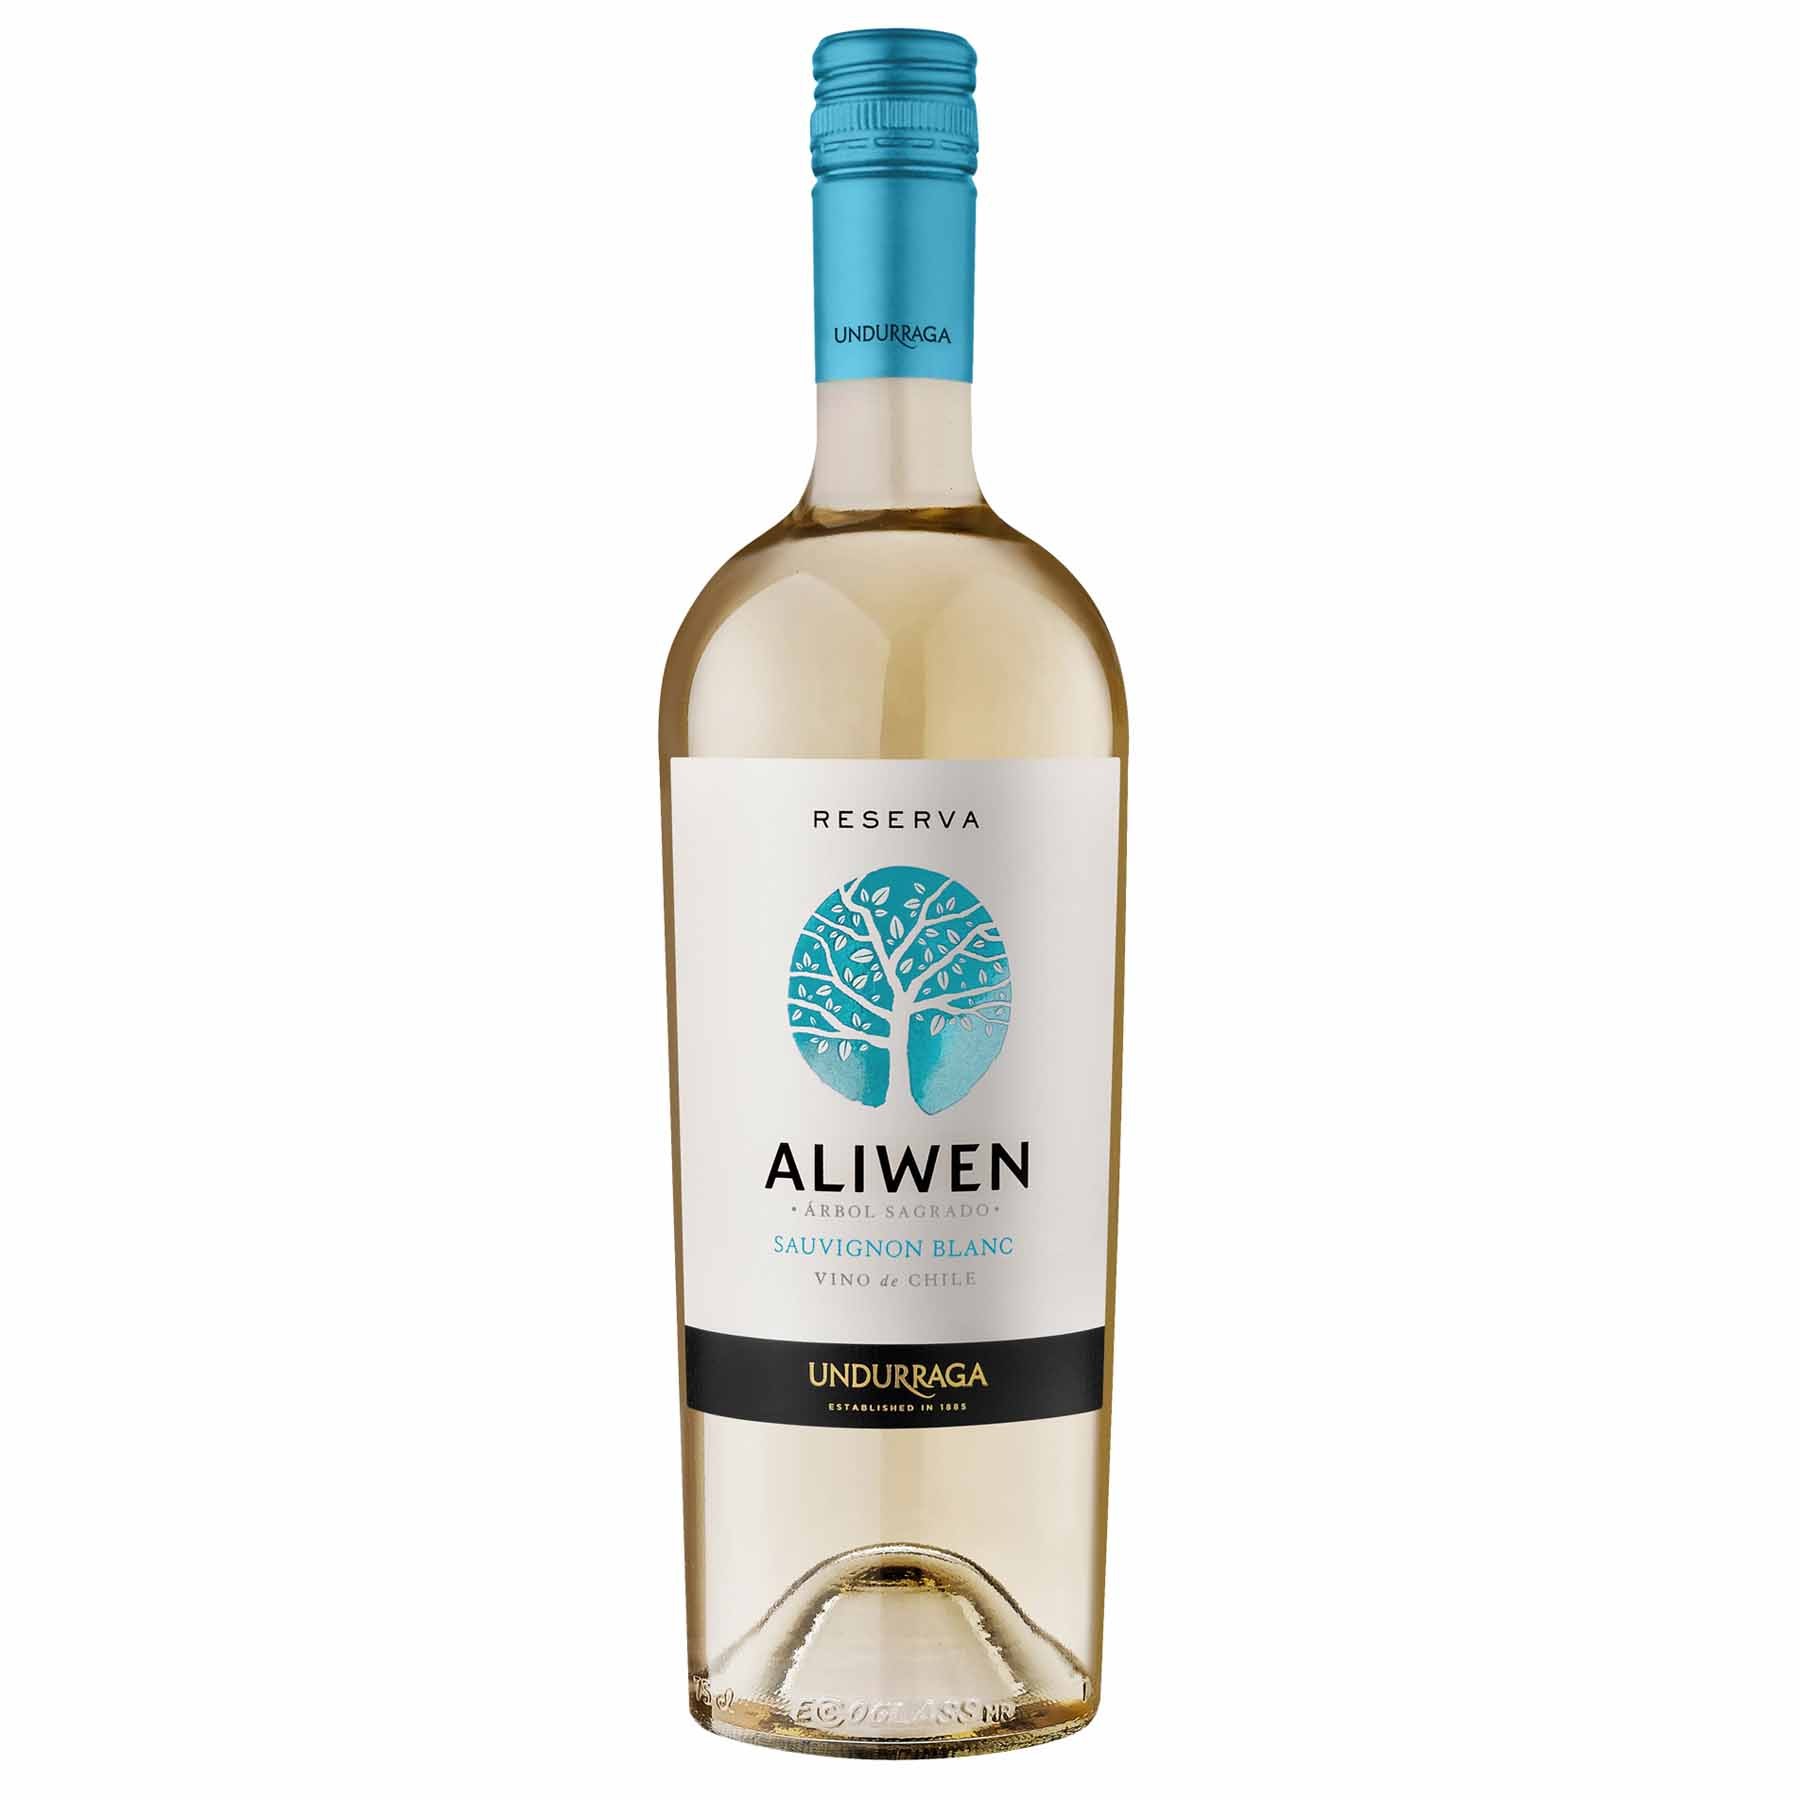 Vinho Branco Chileno Undurraga Aliwen Reserva Sauvignon Blanc 2019